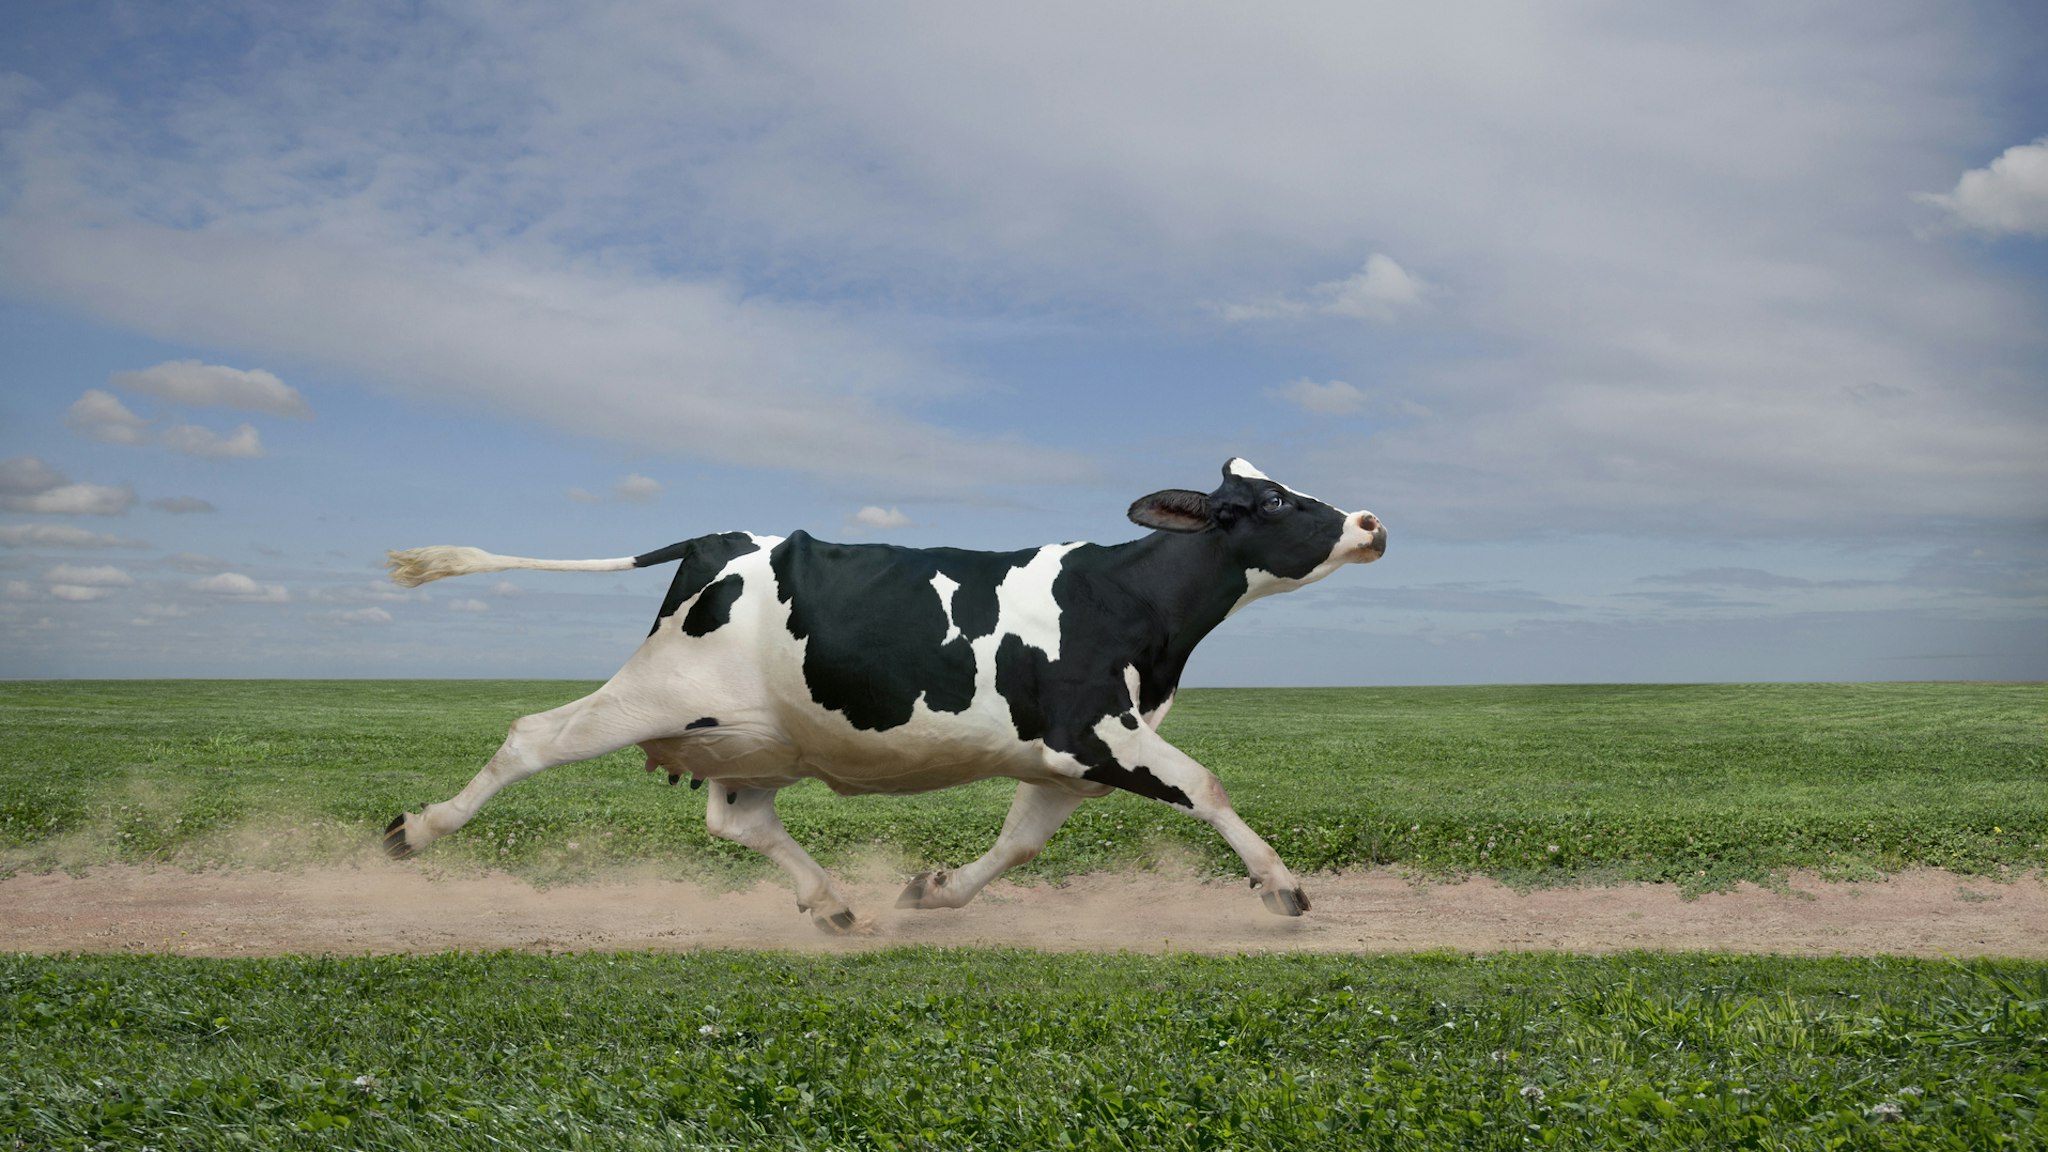 Cow running on dirt path in crop field